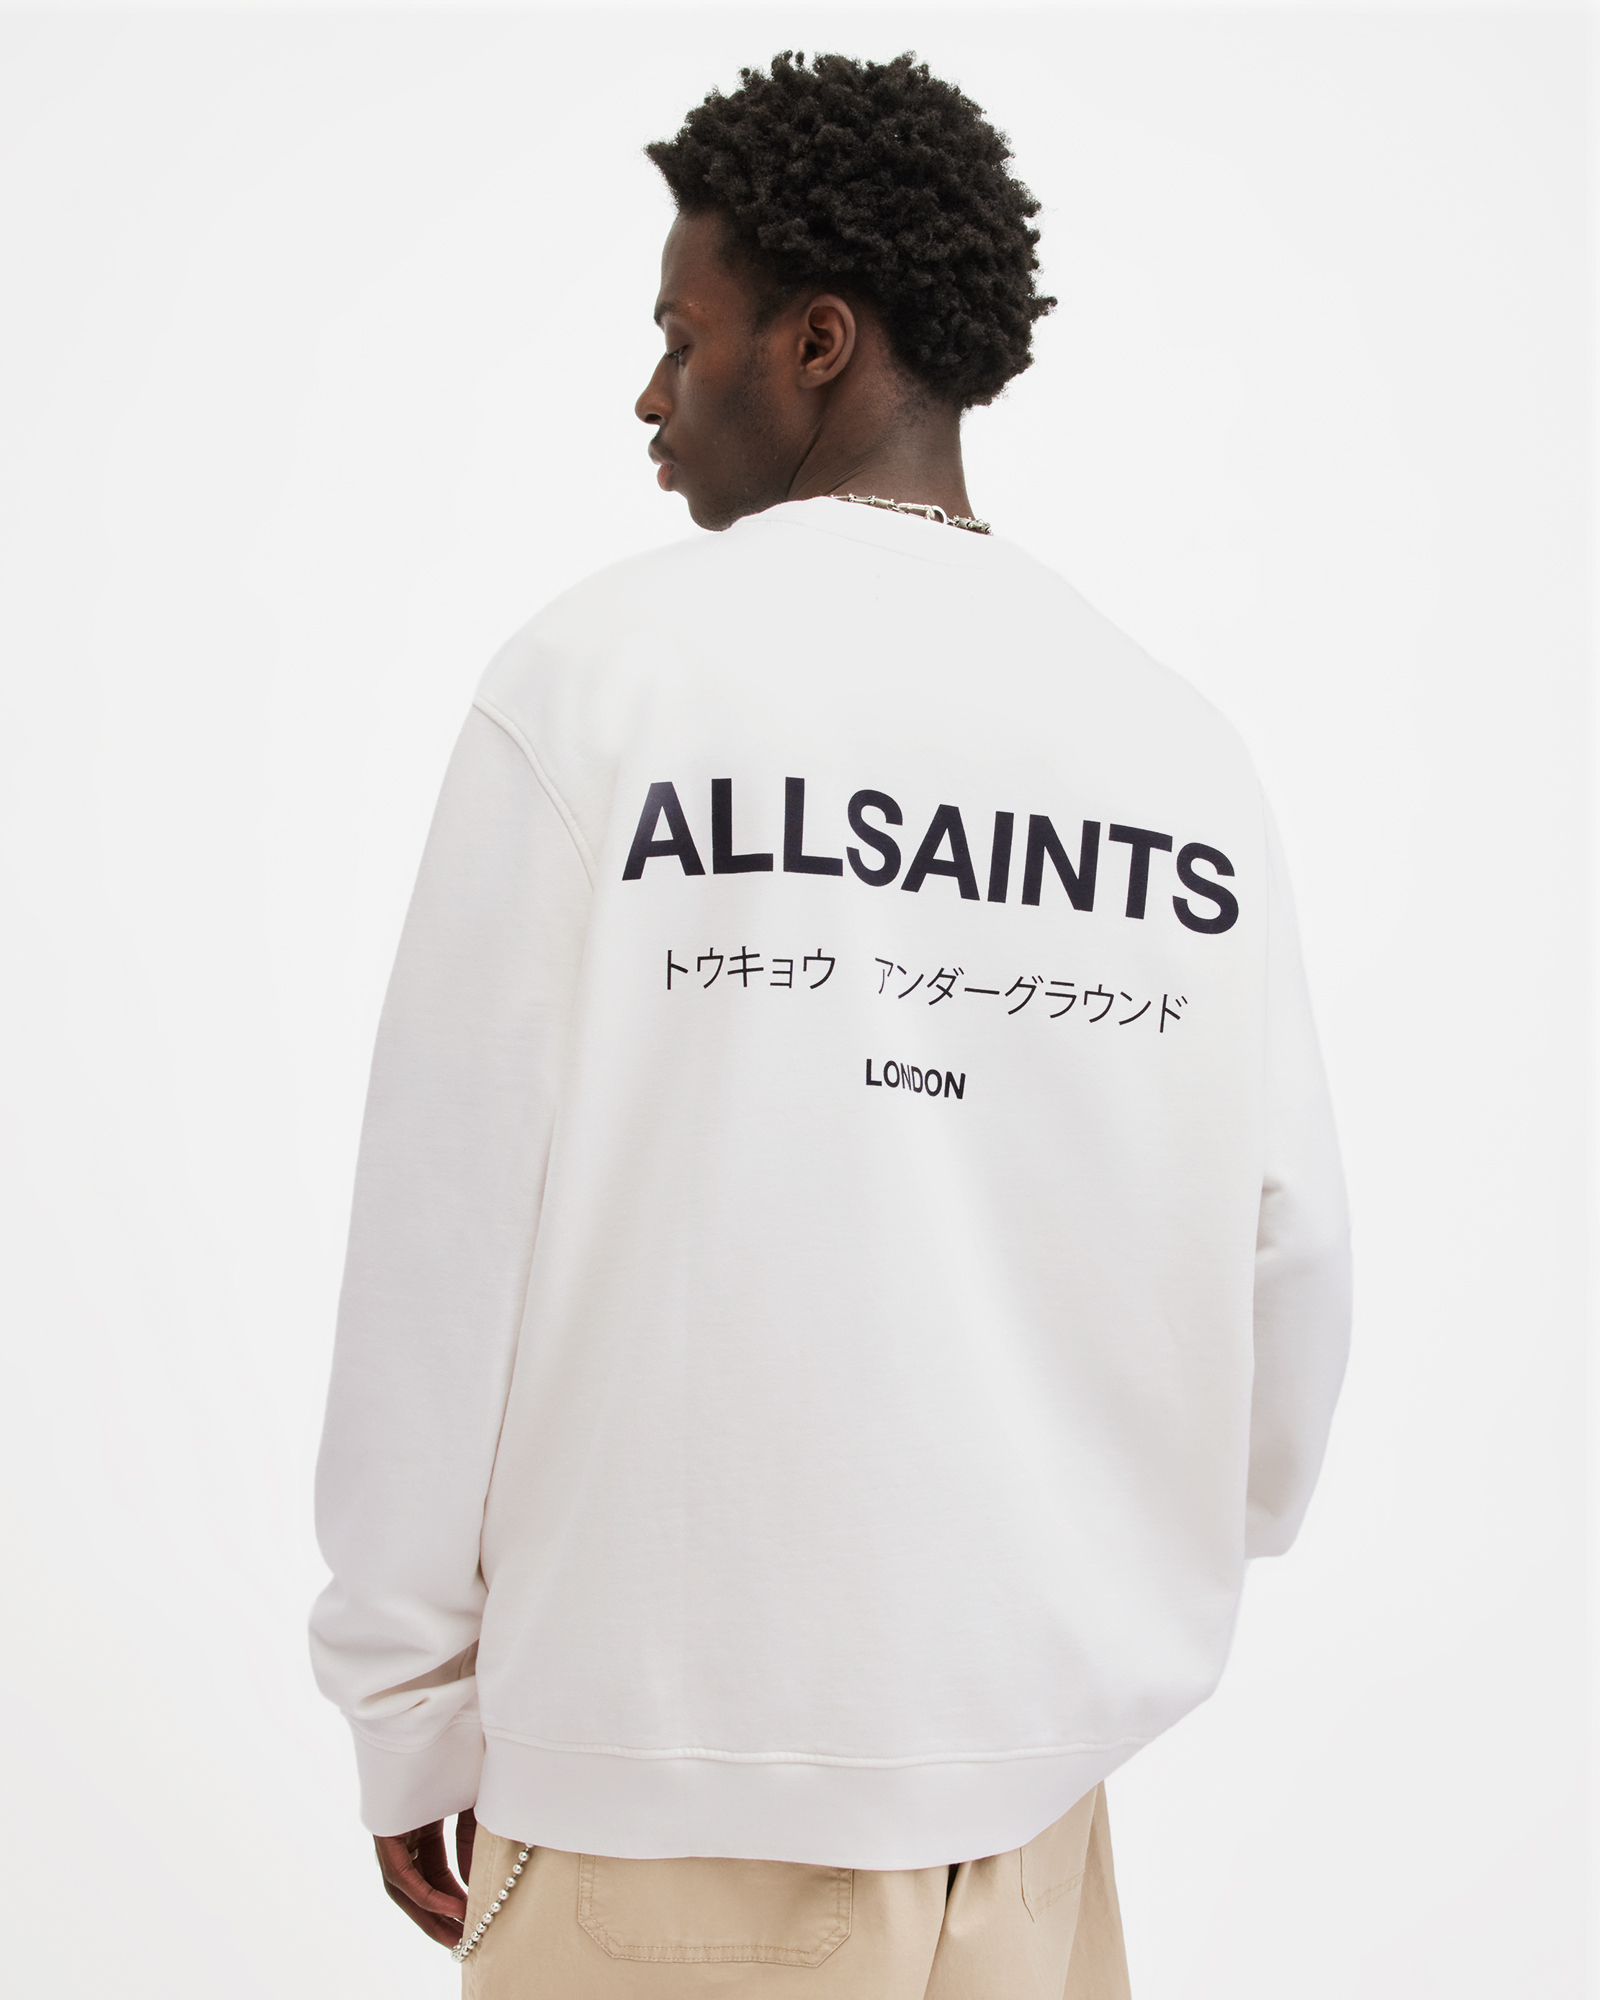 AllSaints Underground Oversized Crew Sweatshirt,, Size: